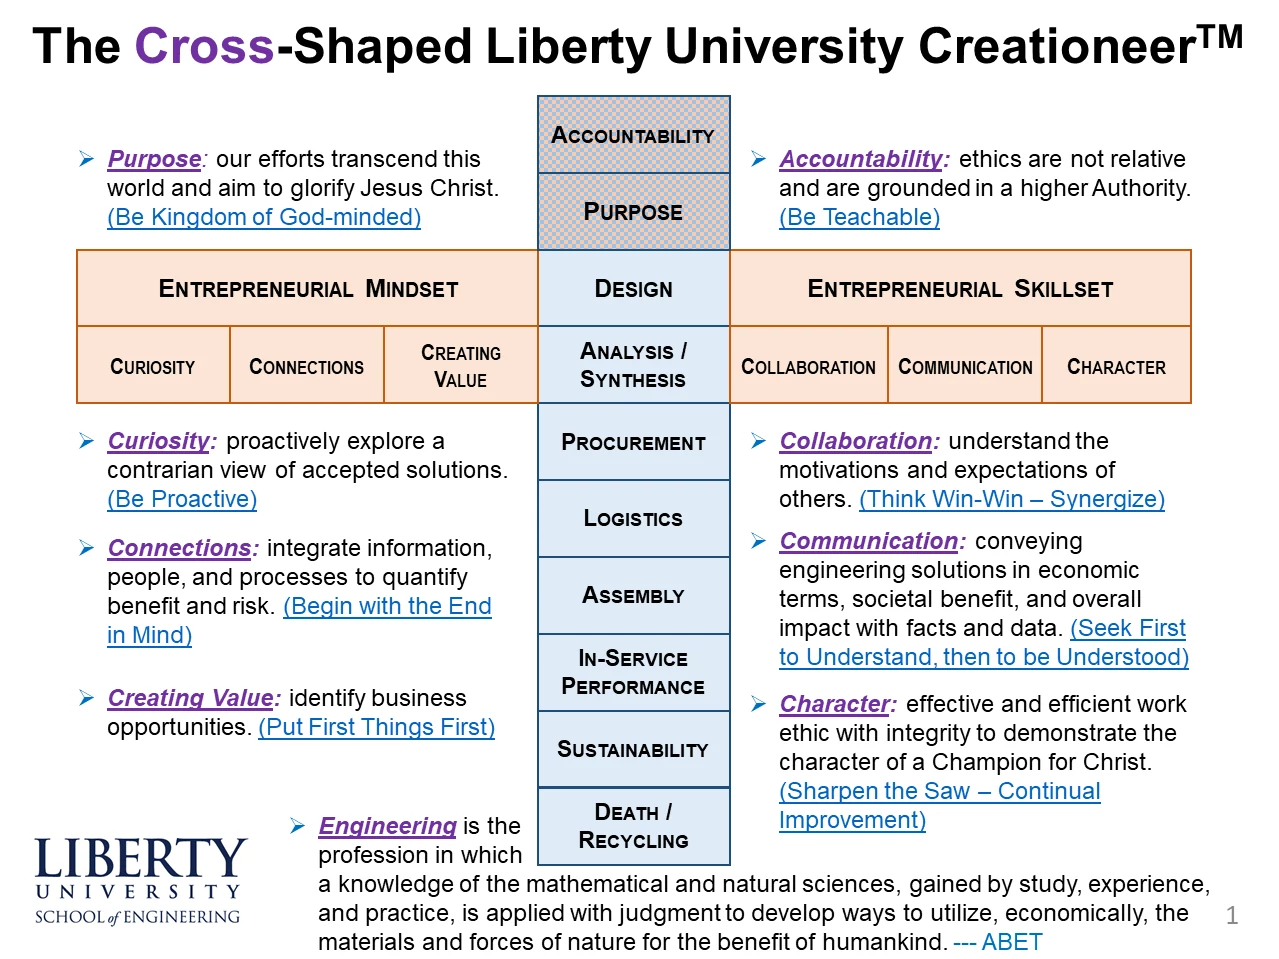 The Cross-shaped Liberty University Creationeer